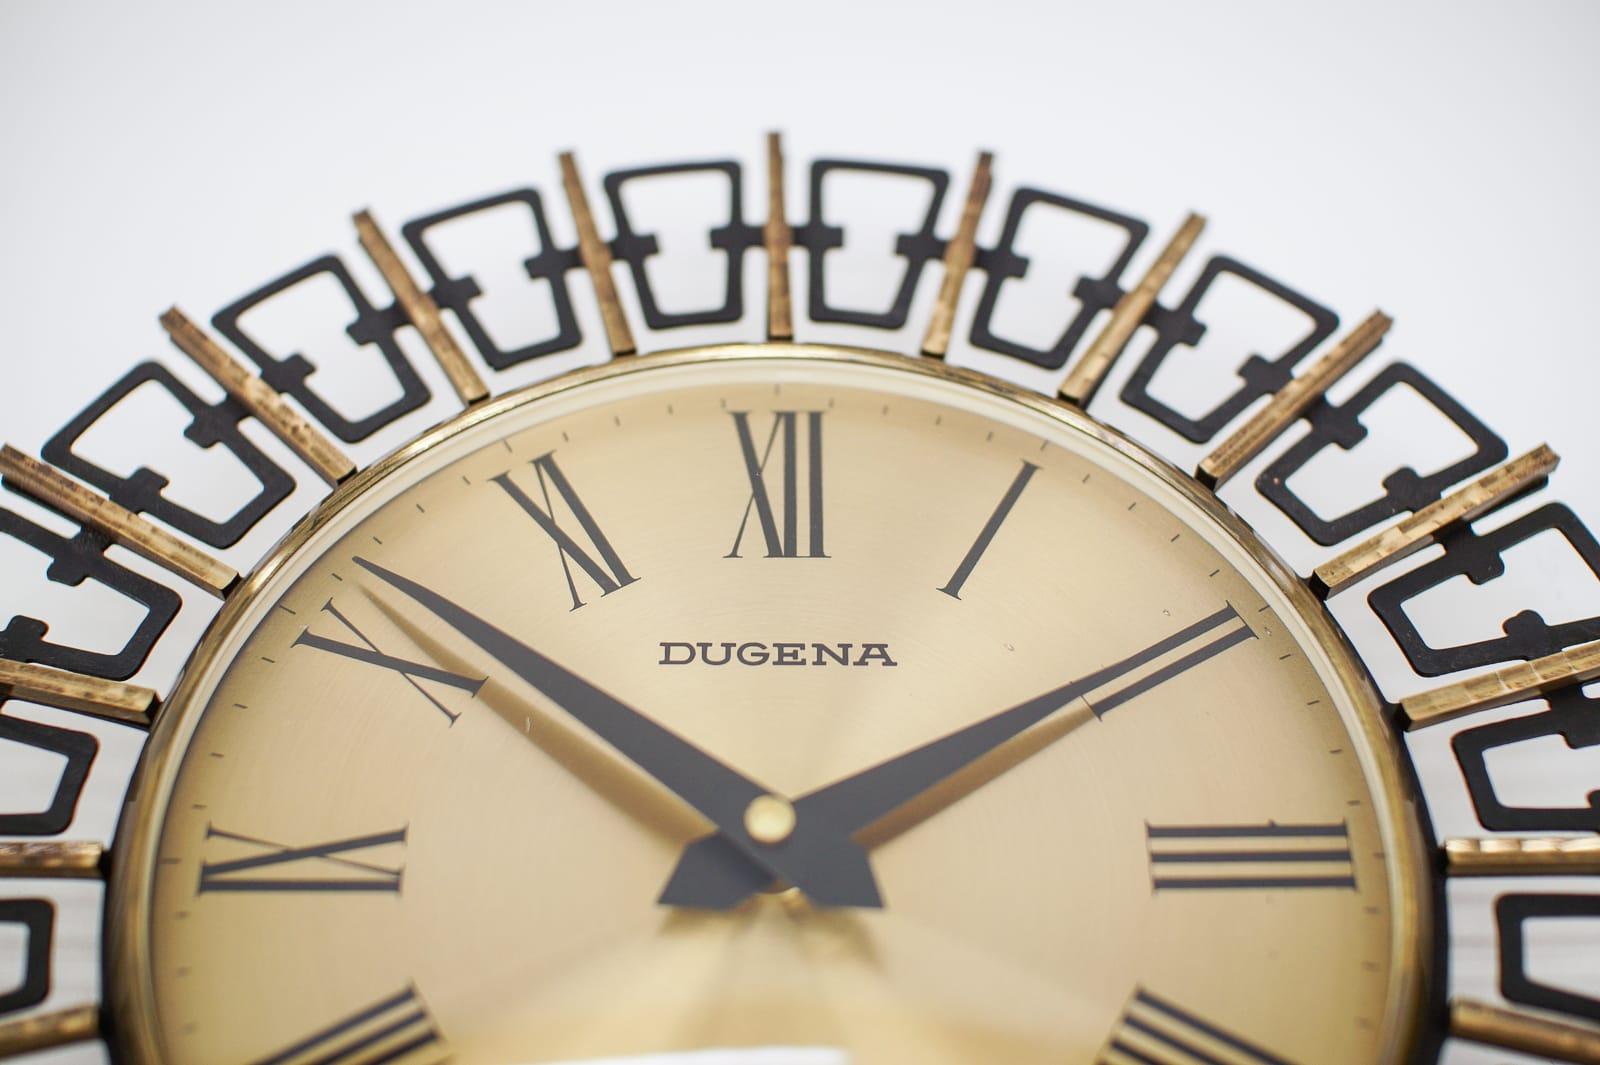 Metal Mid-Century Modern Sunburst Wall Clock in Brass by Dugena, 1960s, Germany For Sale